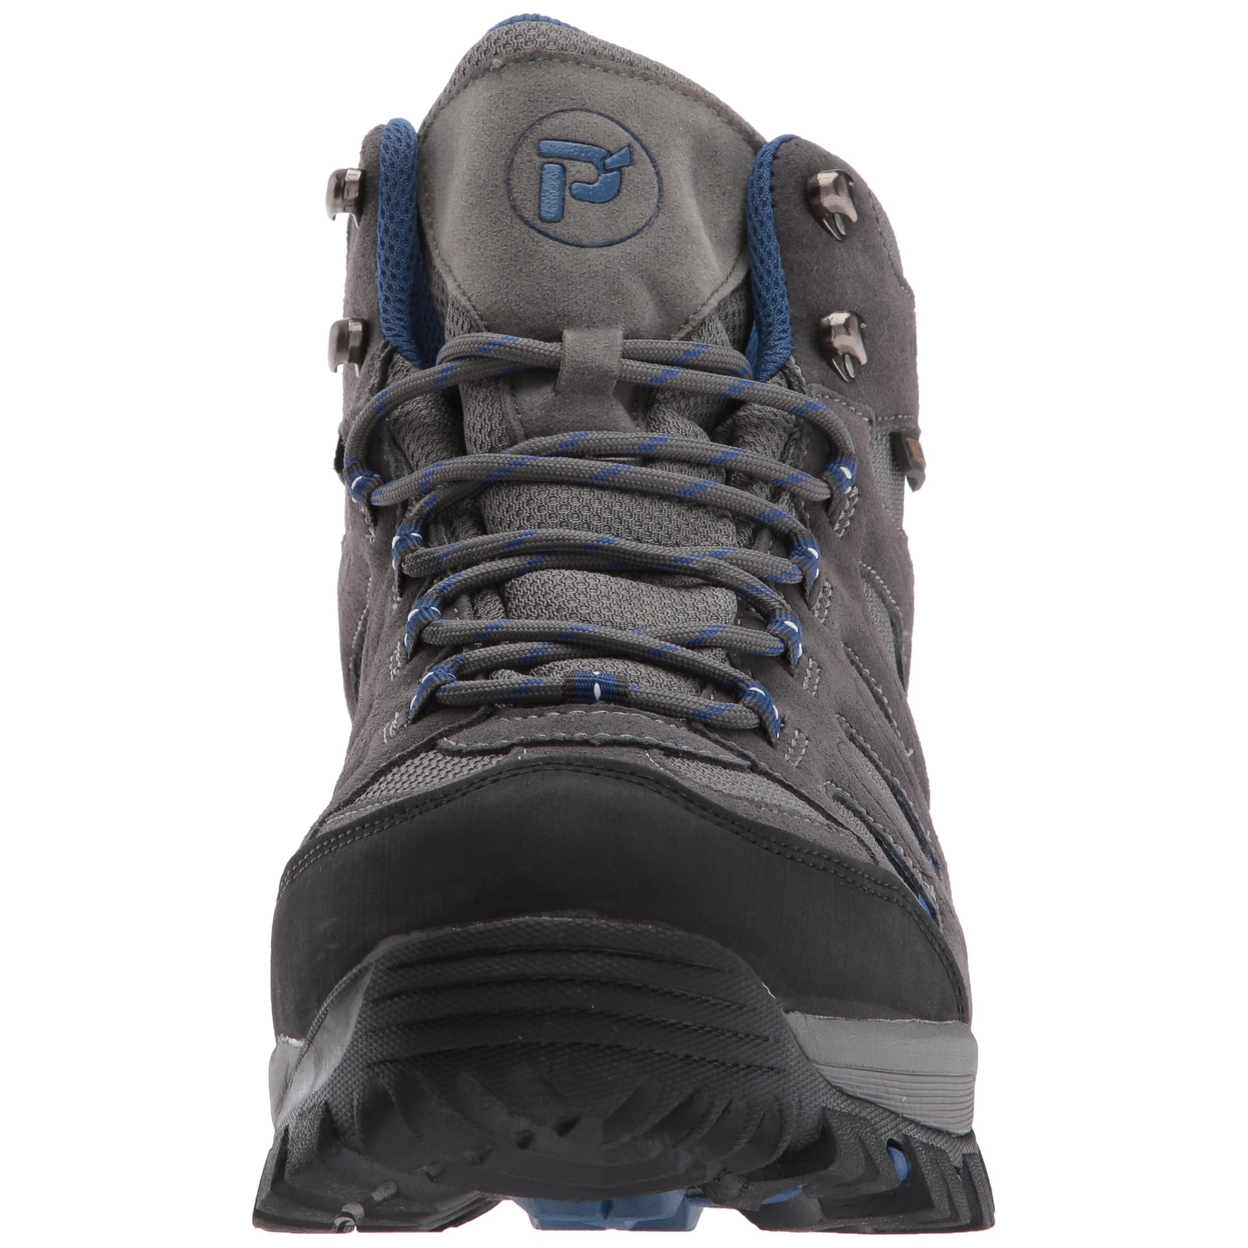 Propet Men's Ridge Walker Hiking Boot Grey/Blue - M3599GRB GREY/BLUE - GREY/BLUE, 8.5-E